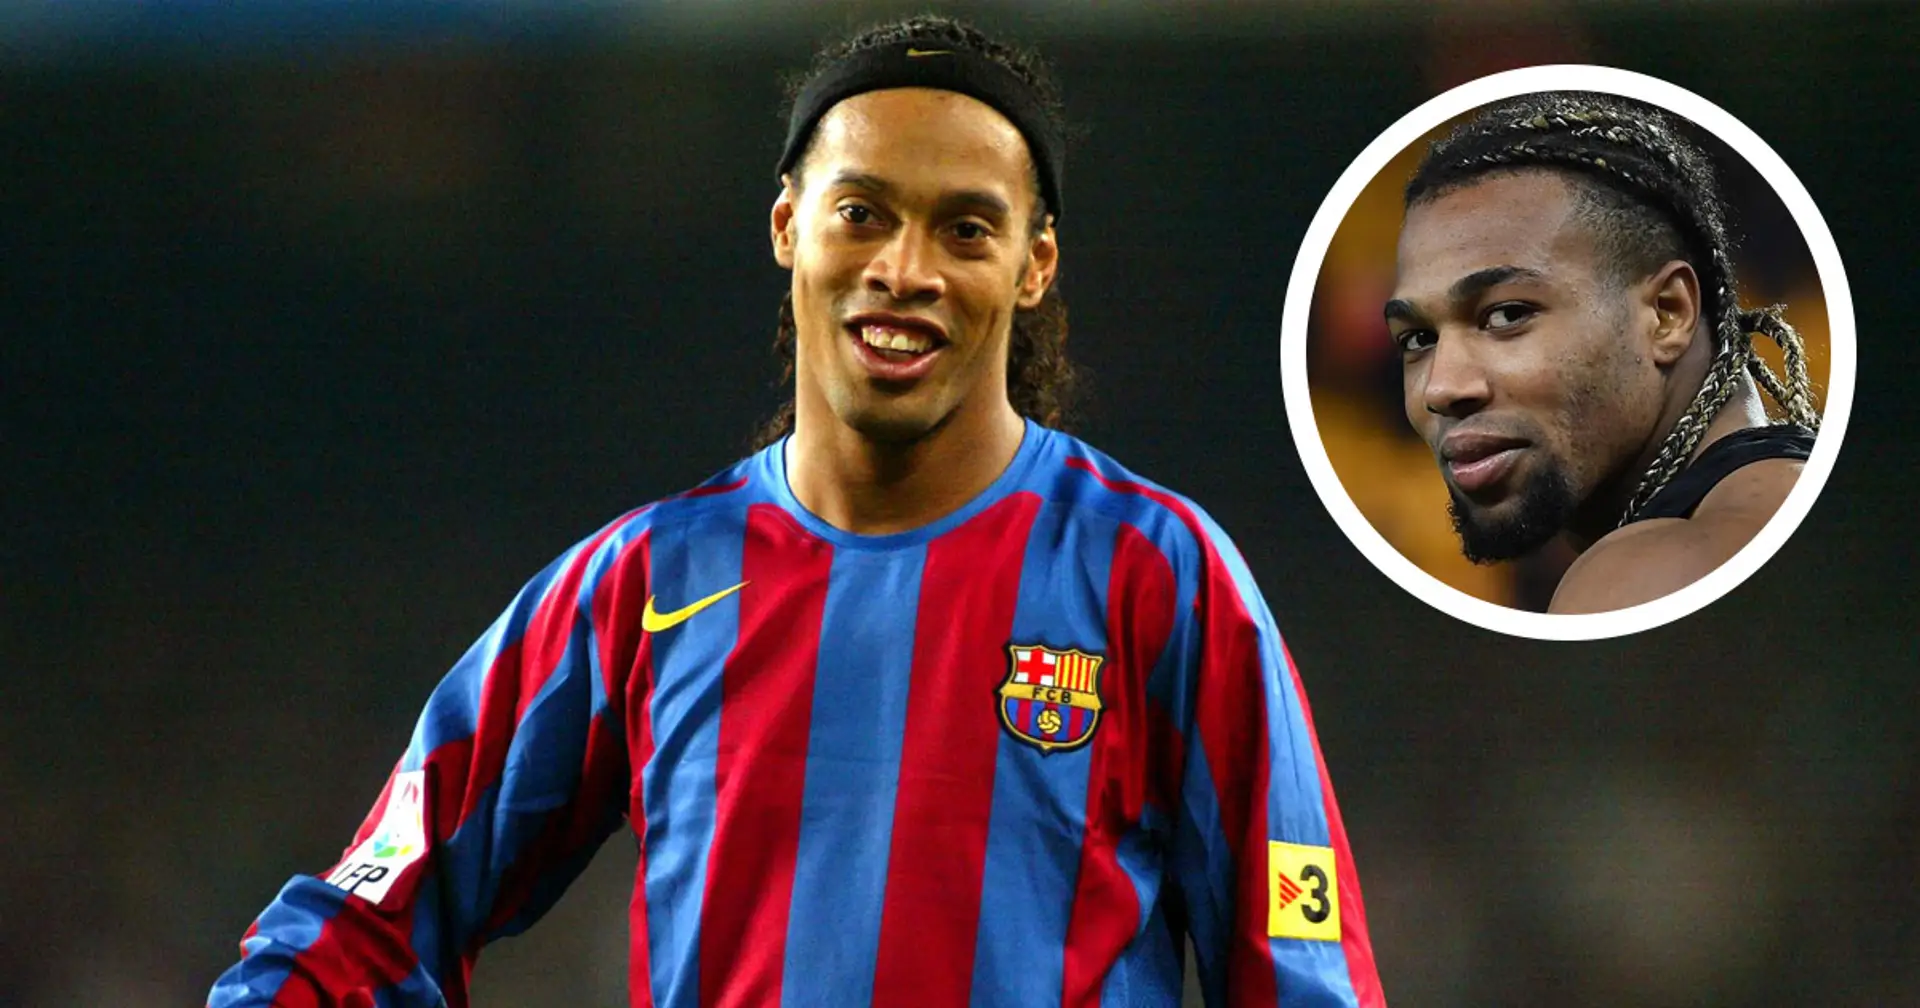 'We used to see him train next to La Masia': Adama Traore remembers idolizing Ronaldinho as a kid